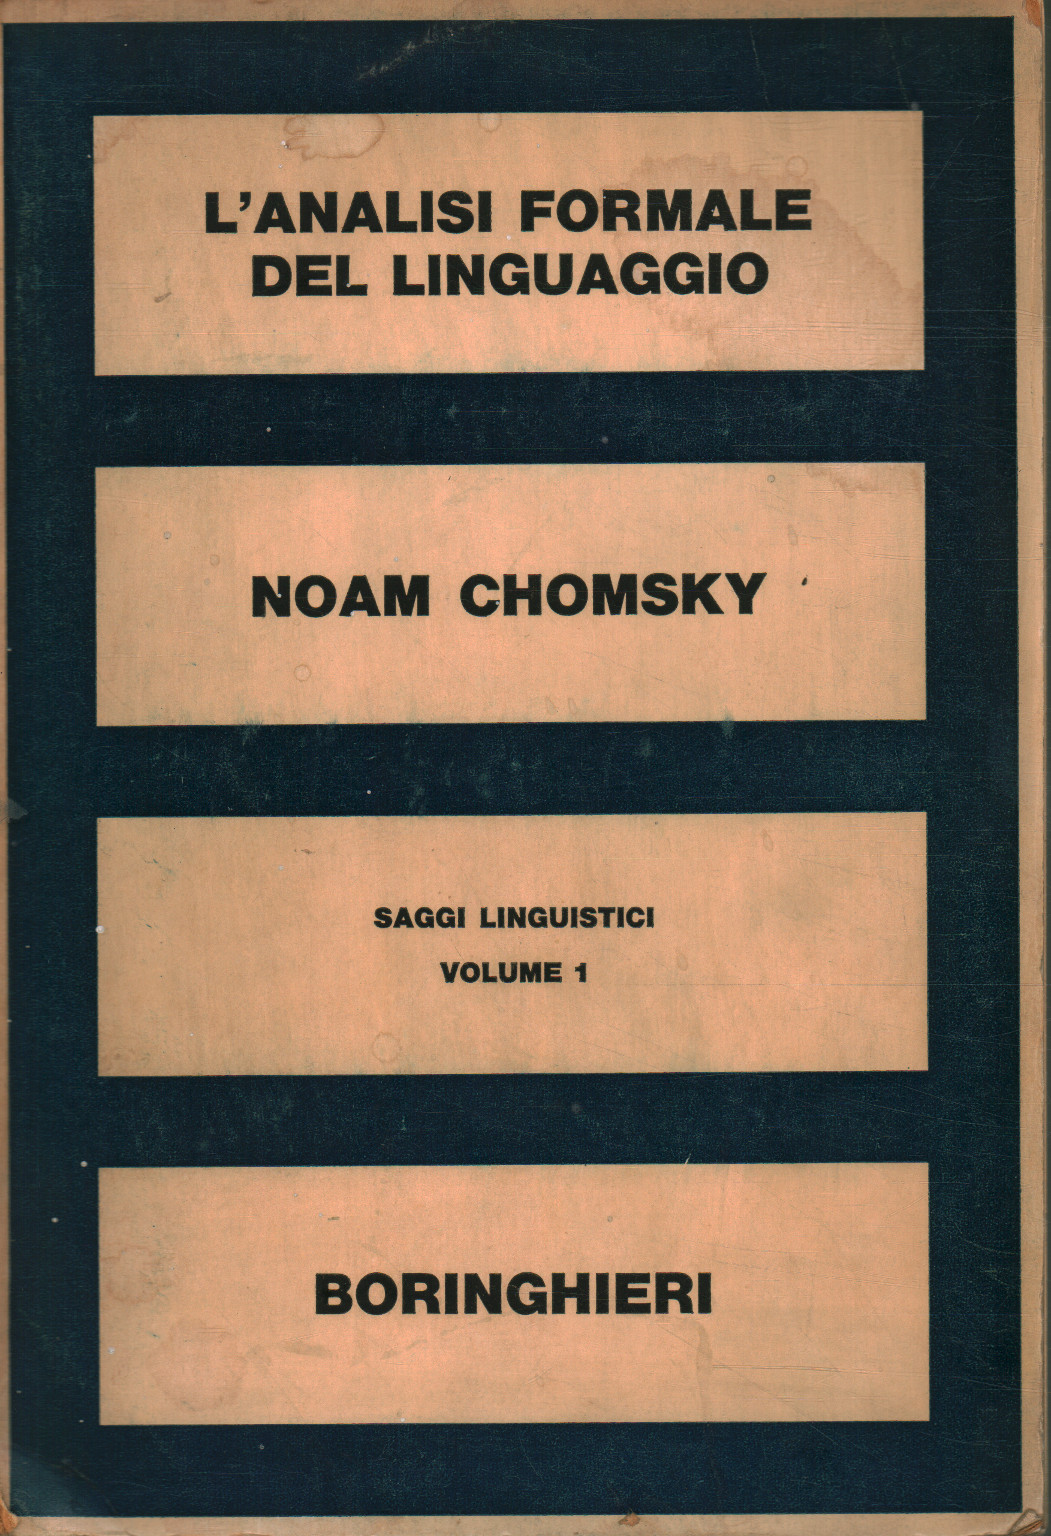 Ensayos lingüísticos (volumen 1). Análisis formal de Noam Chomsky